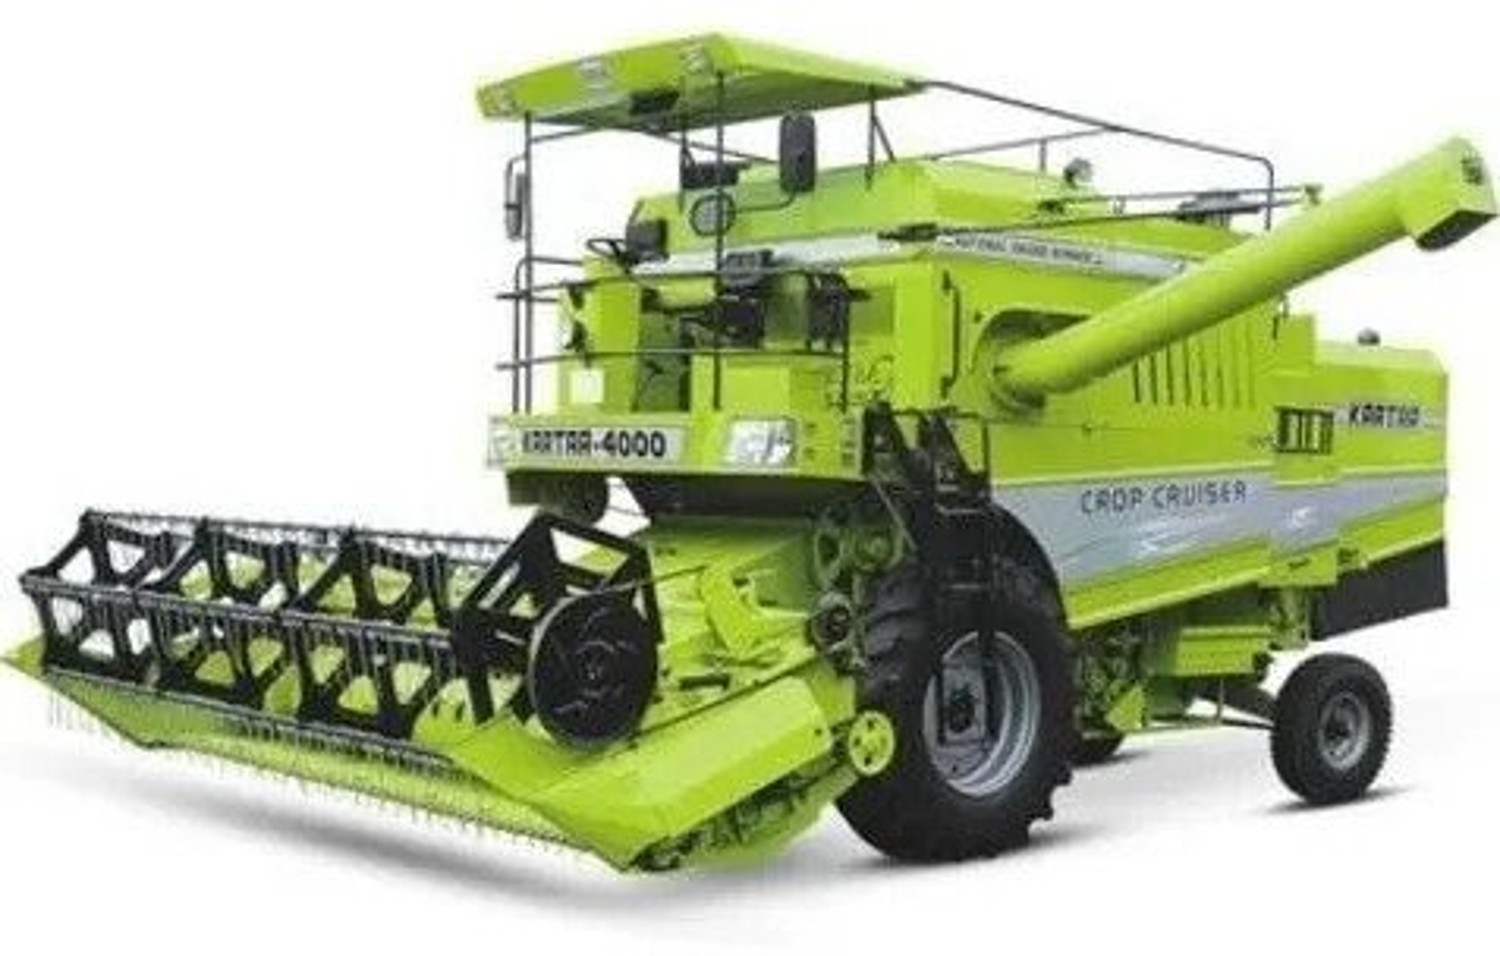 Kartar 4000 Harvester Specifications in India - AtoAllinks